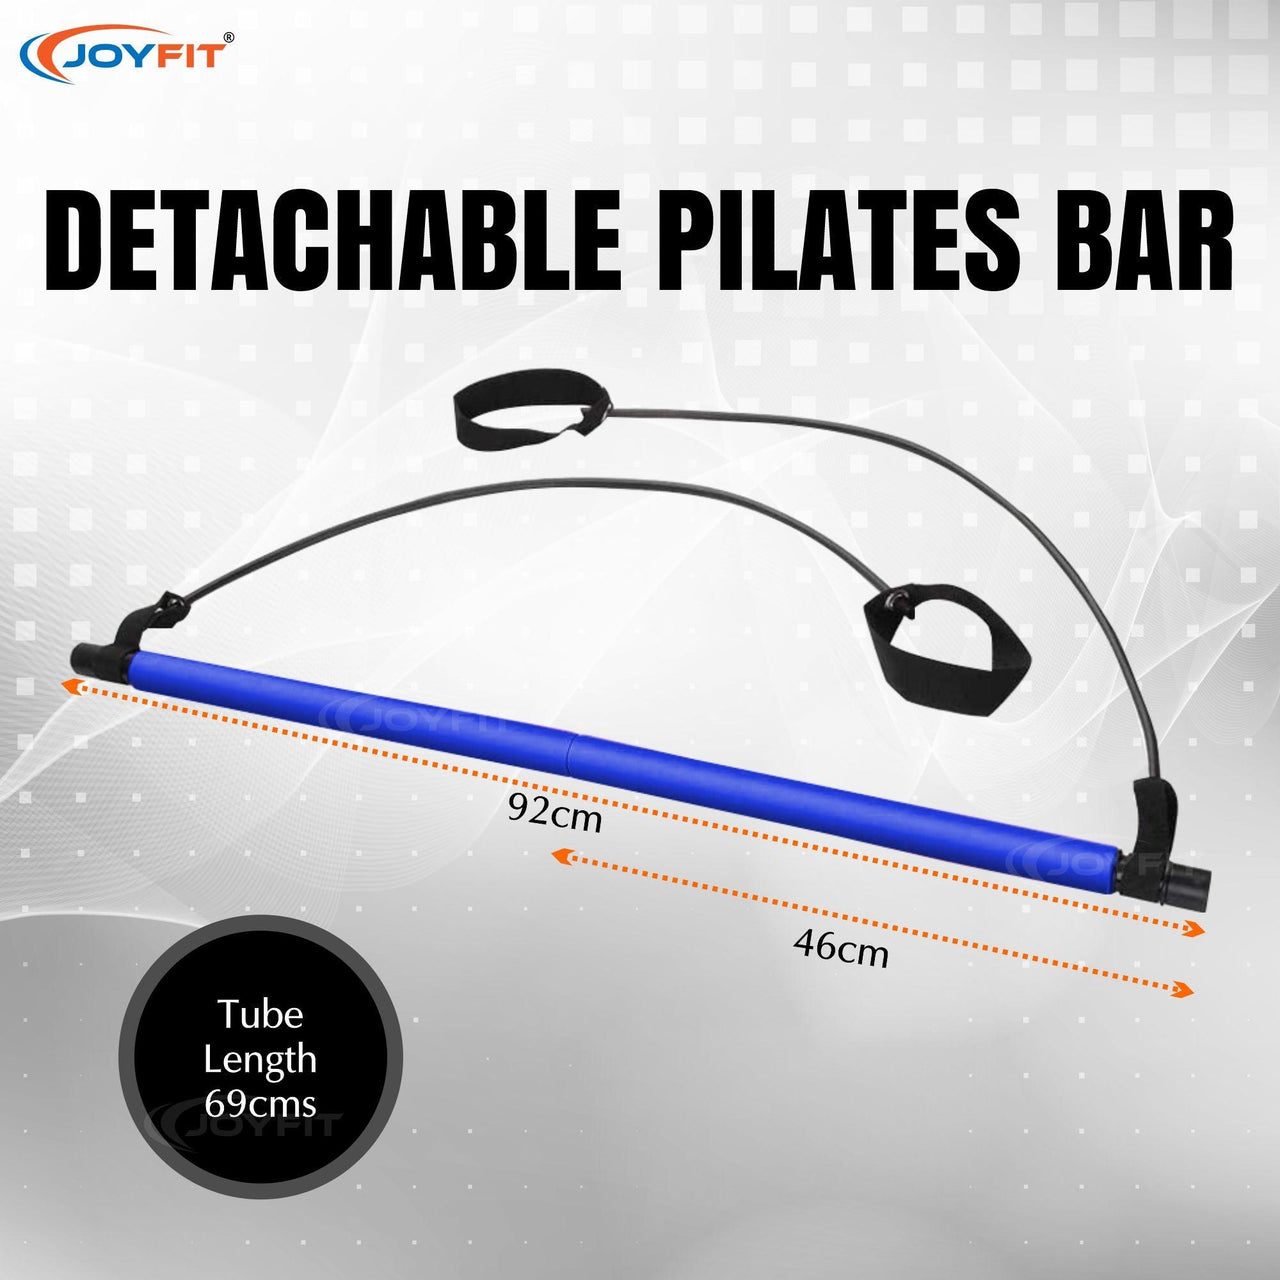 Detachable Pilates Bar